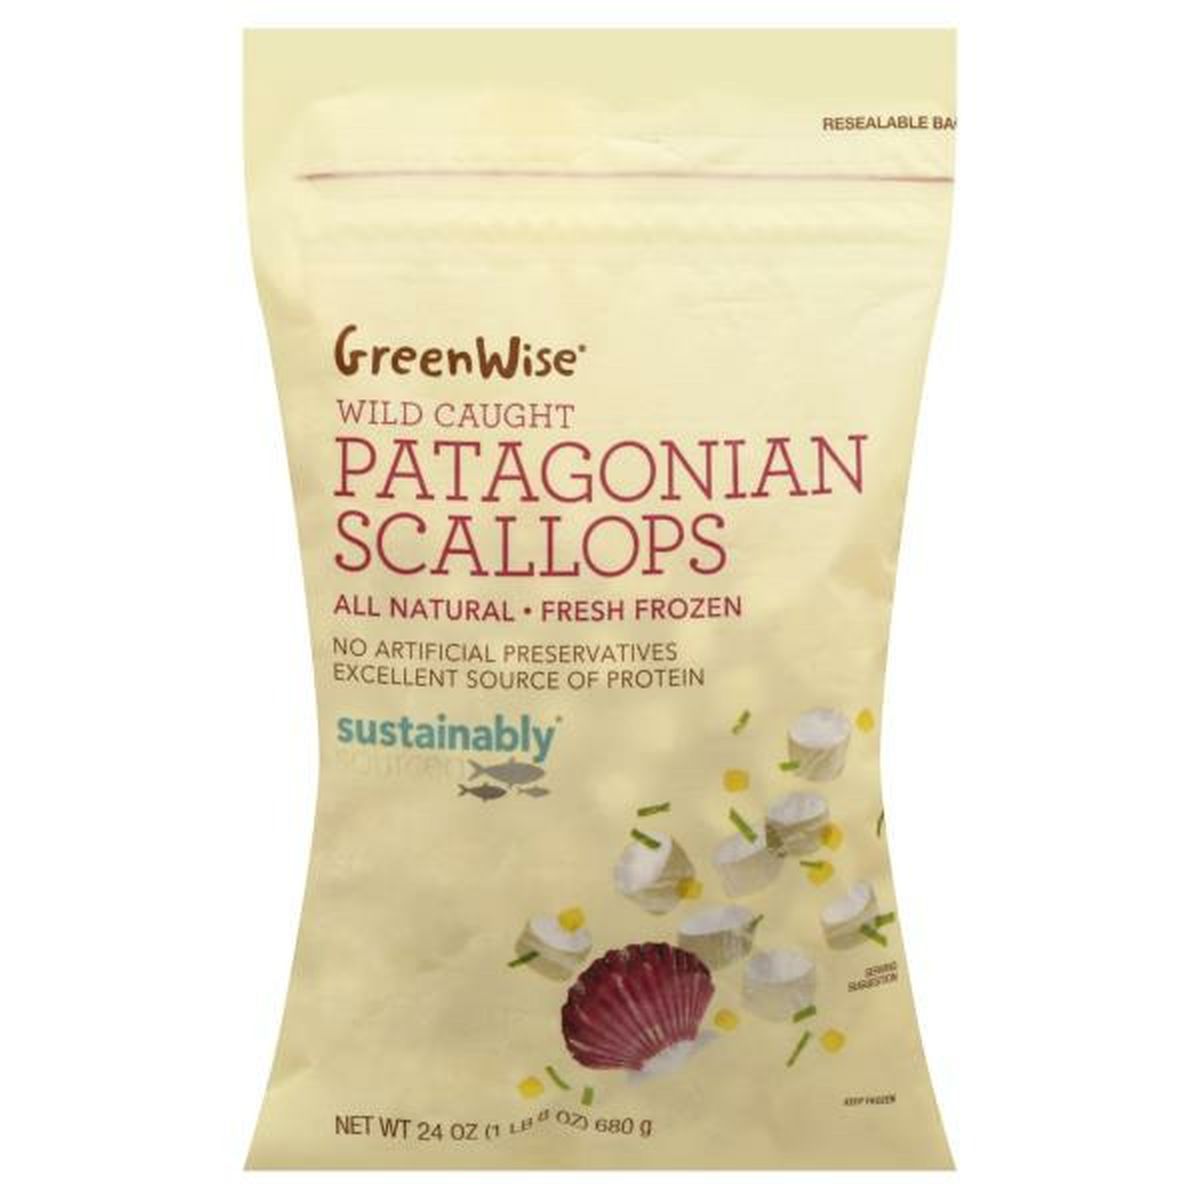 Publix Pategonian Scallops 24oz frozen bag BOGO. Works out to $21.59 for 3lbs. Thru Thursday.